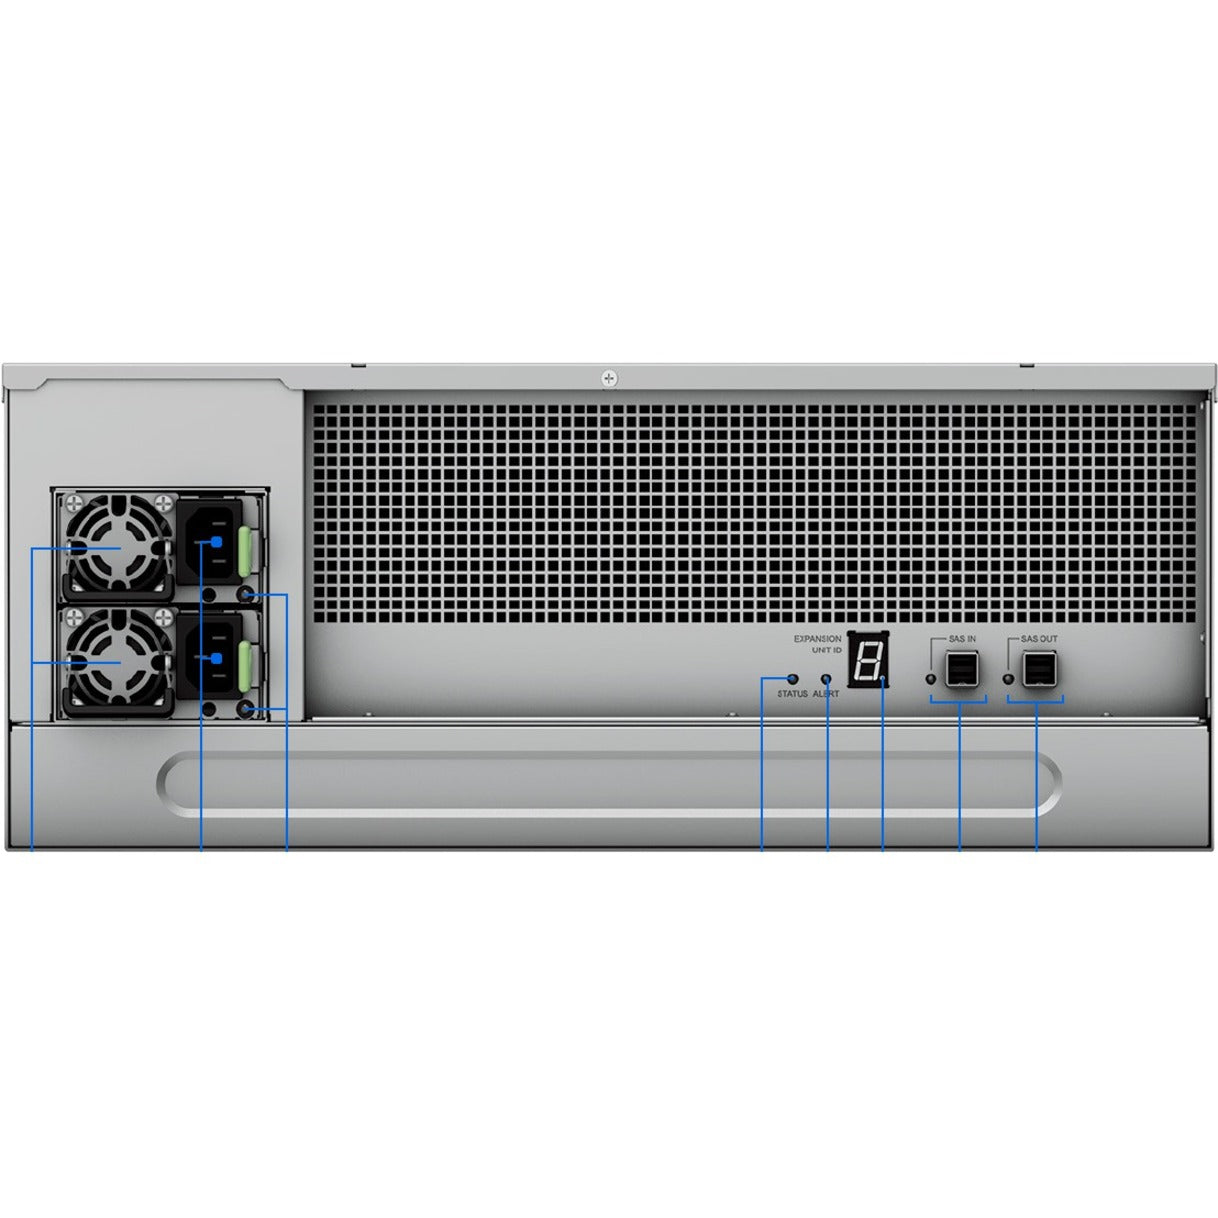 Synology RX6022SAS Expansion Unit RX6022sas, 60-Bay DAS Storage System, 5-Year Warranty, RoHS Certified